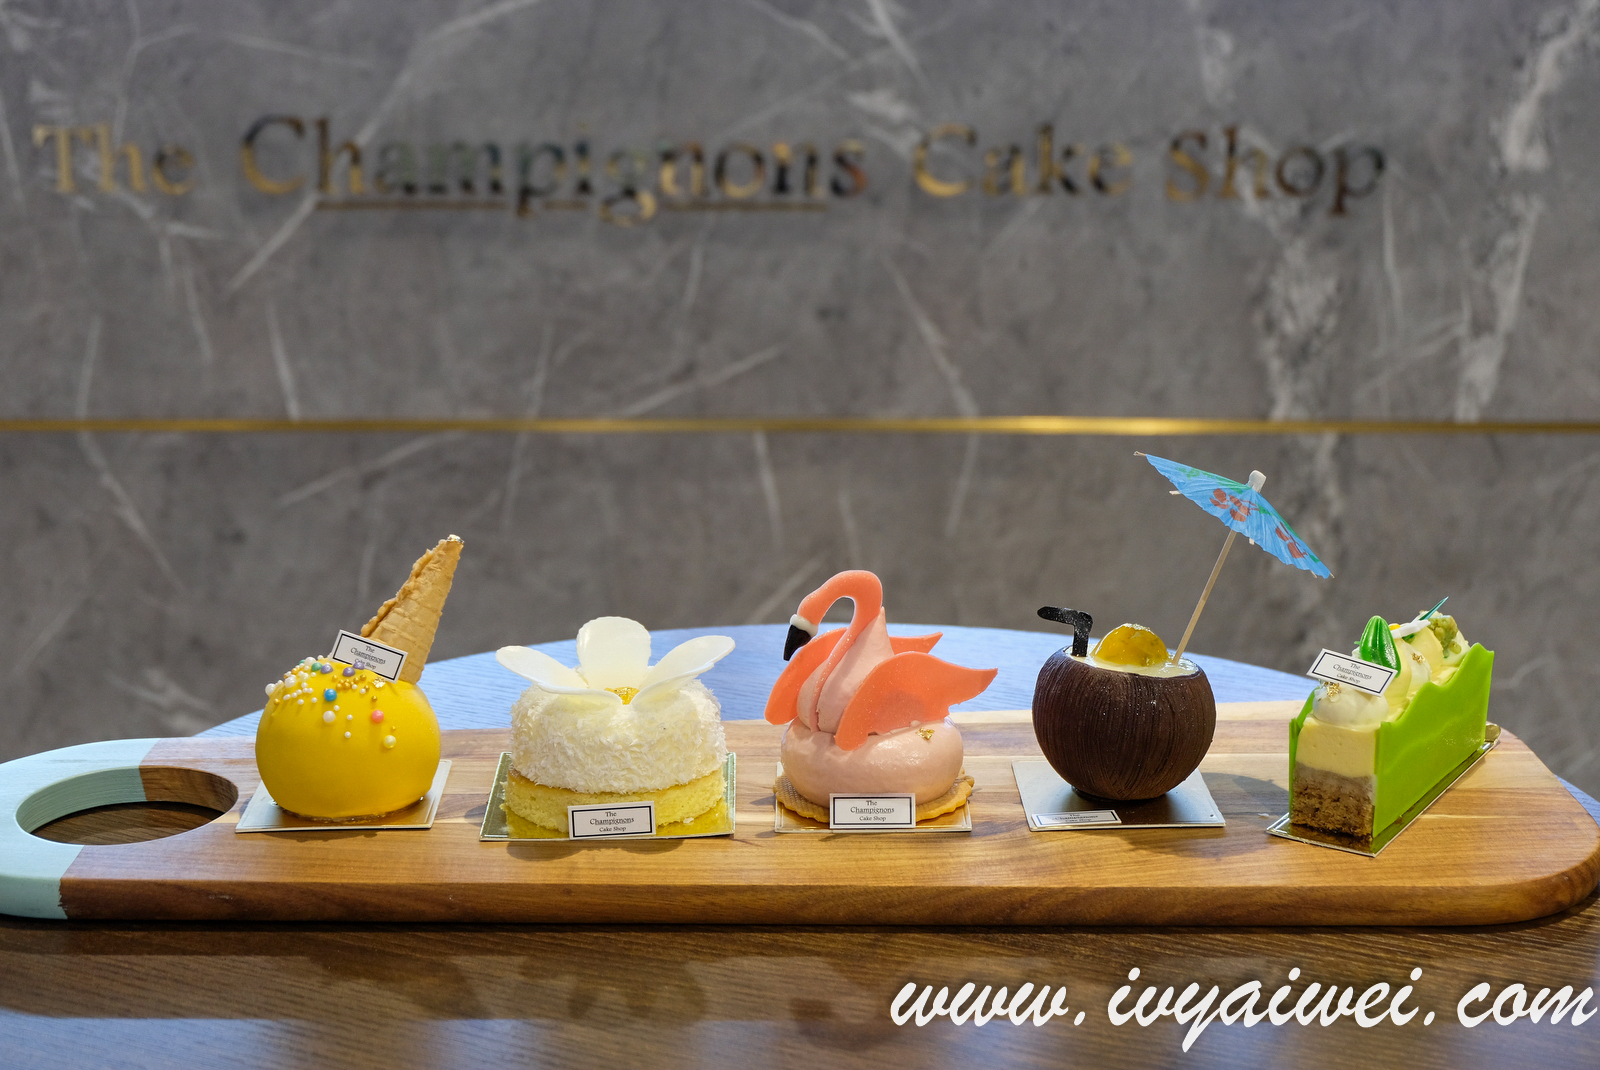 The Champignons Cake Shop @ Ekocheras